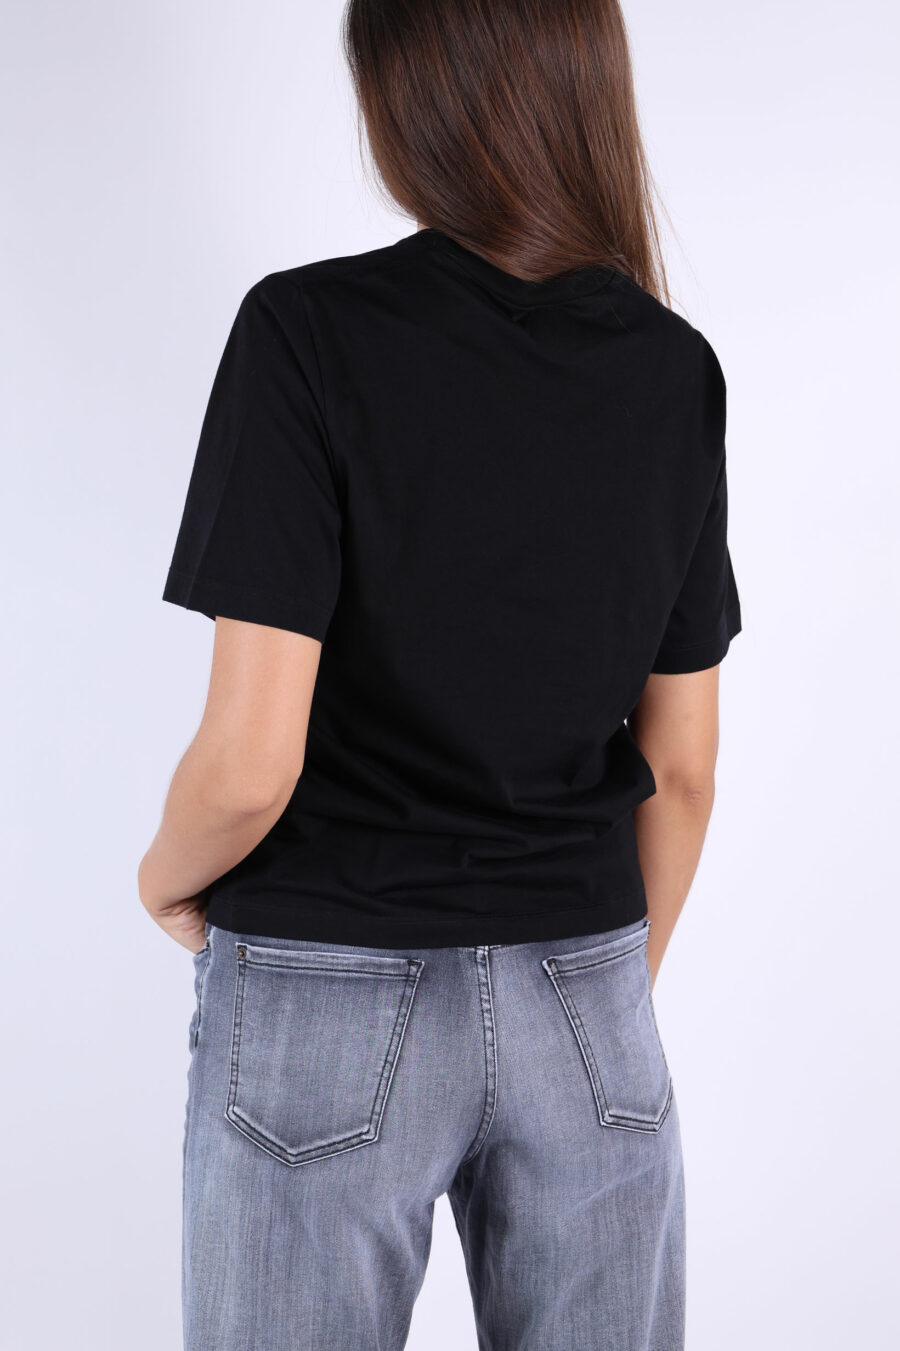 Camiseta negra con logo "Pac-man" - 361223054662201963